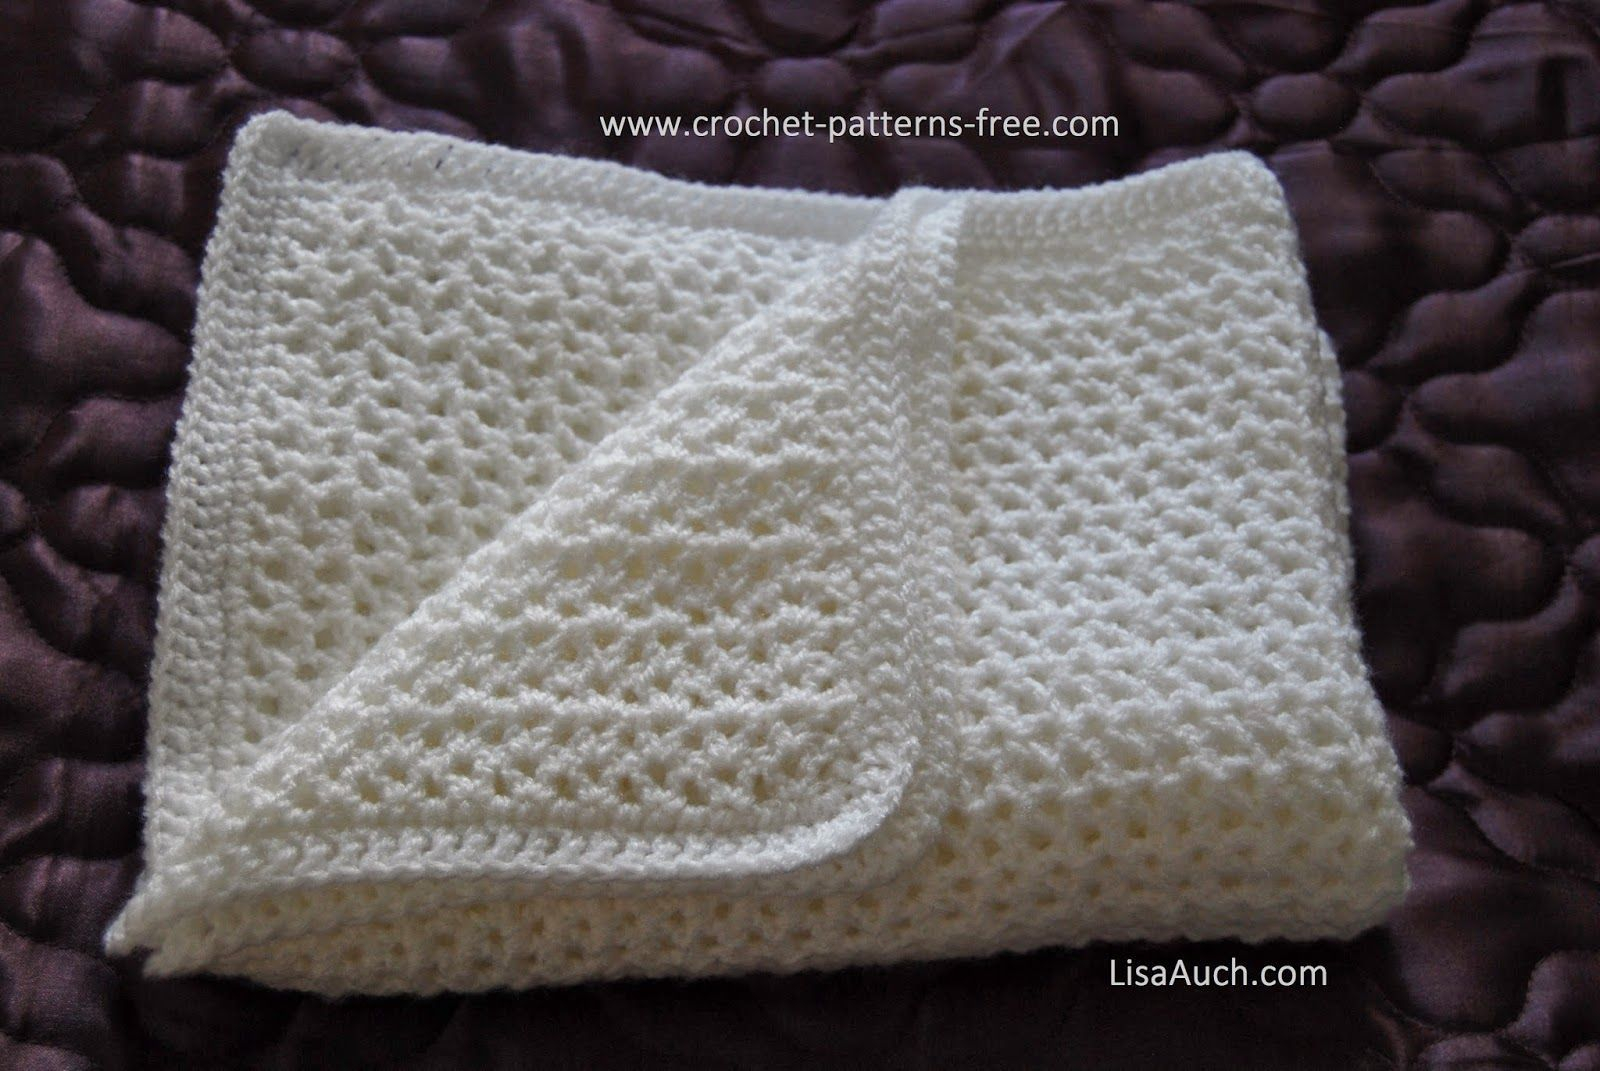 Beginner Crochet Patterns Free How To Crochet An Easy Ba Blanket Ideal For Beginners Free